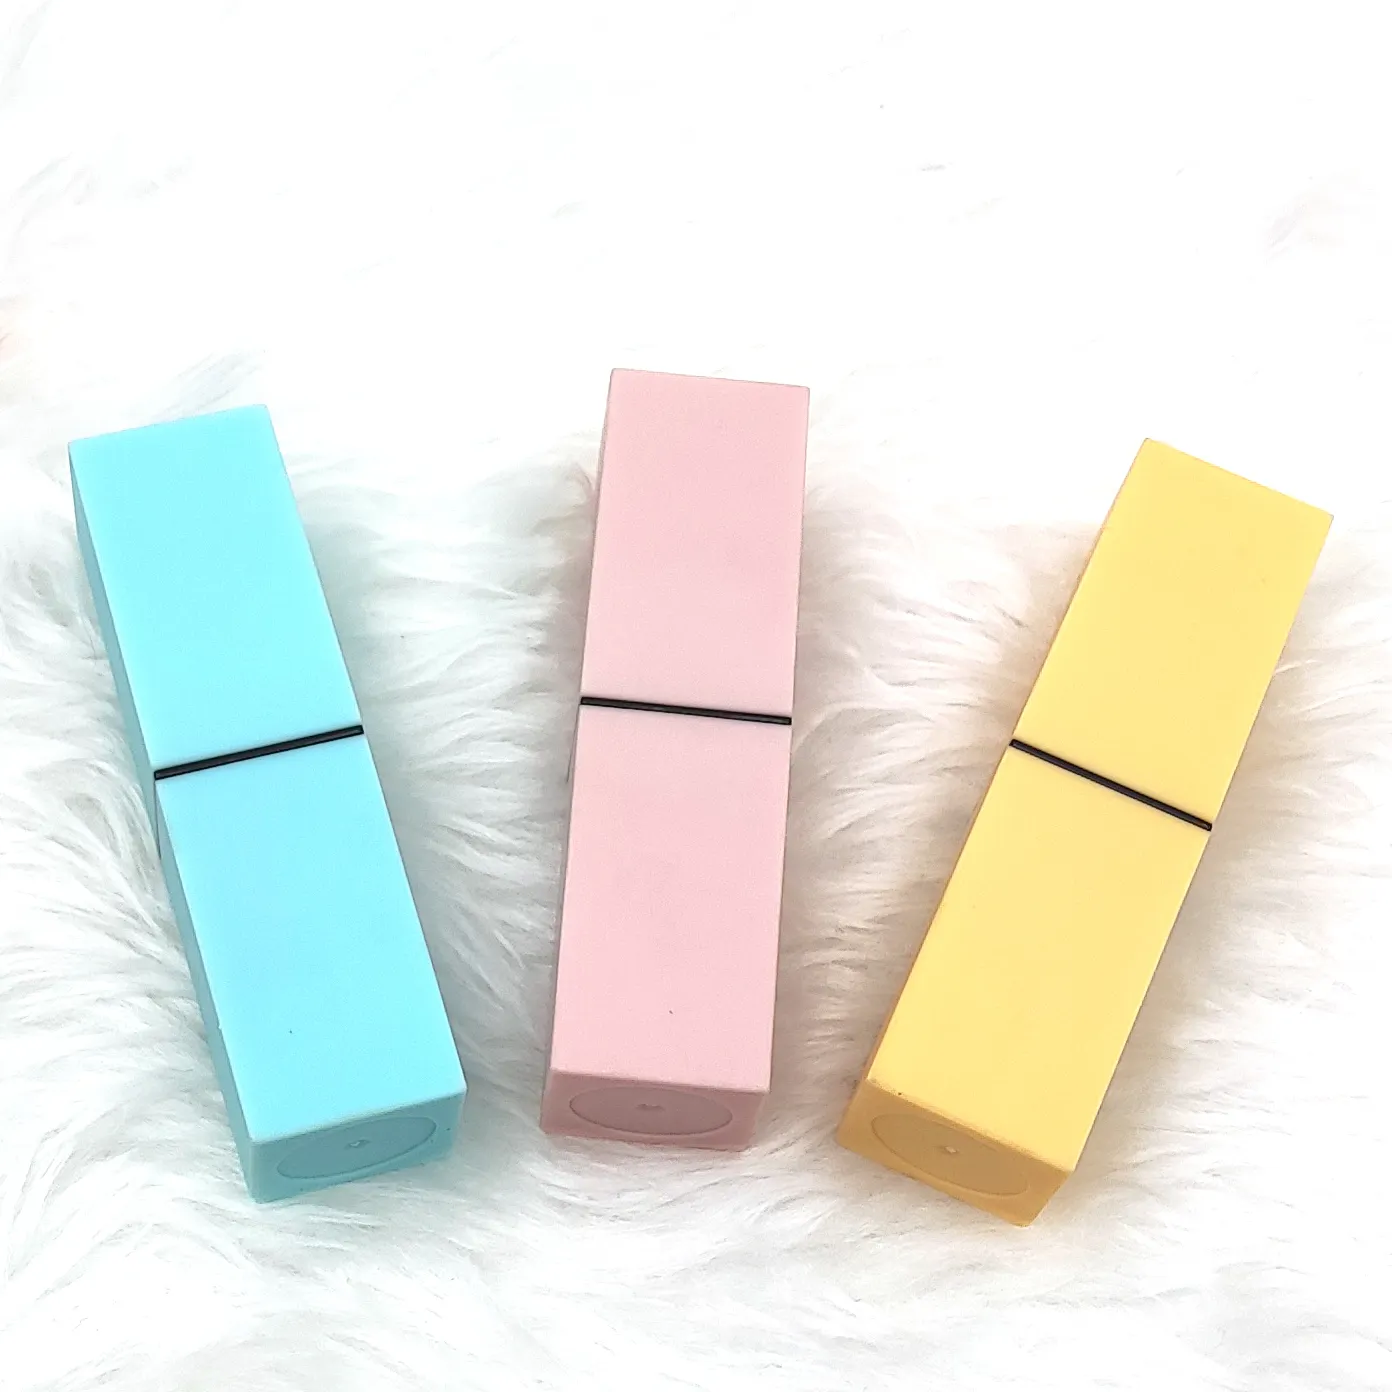 Großhandel ABS Kunststoff 3,5g quadratische Kosmetik verpackung Design für Lippenstift Fall leere rosa Lippenstift Tuben